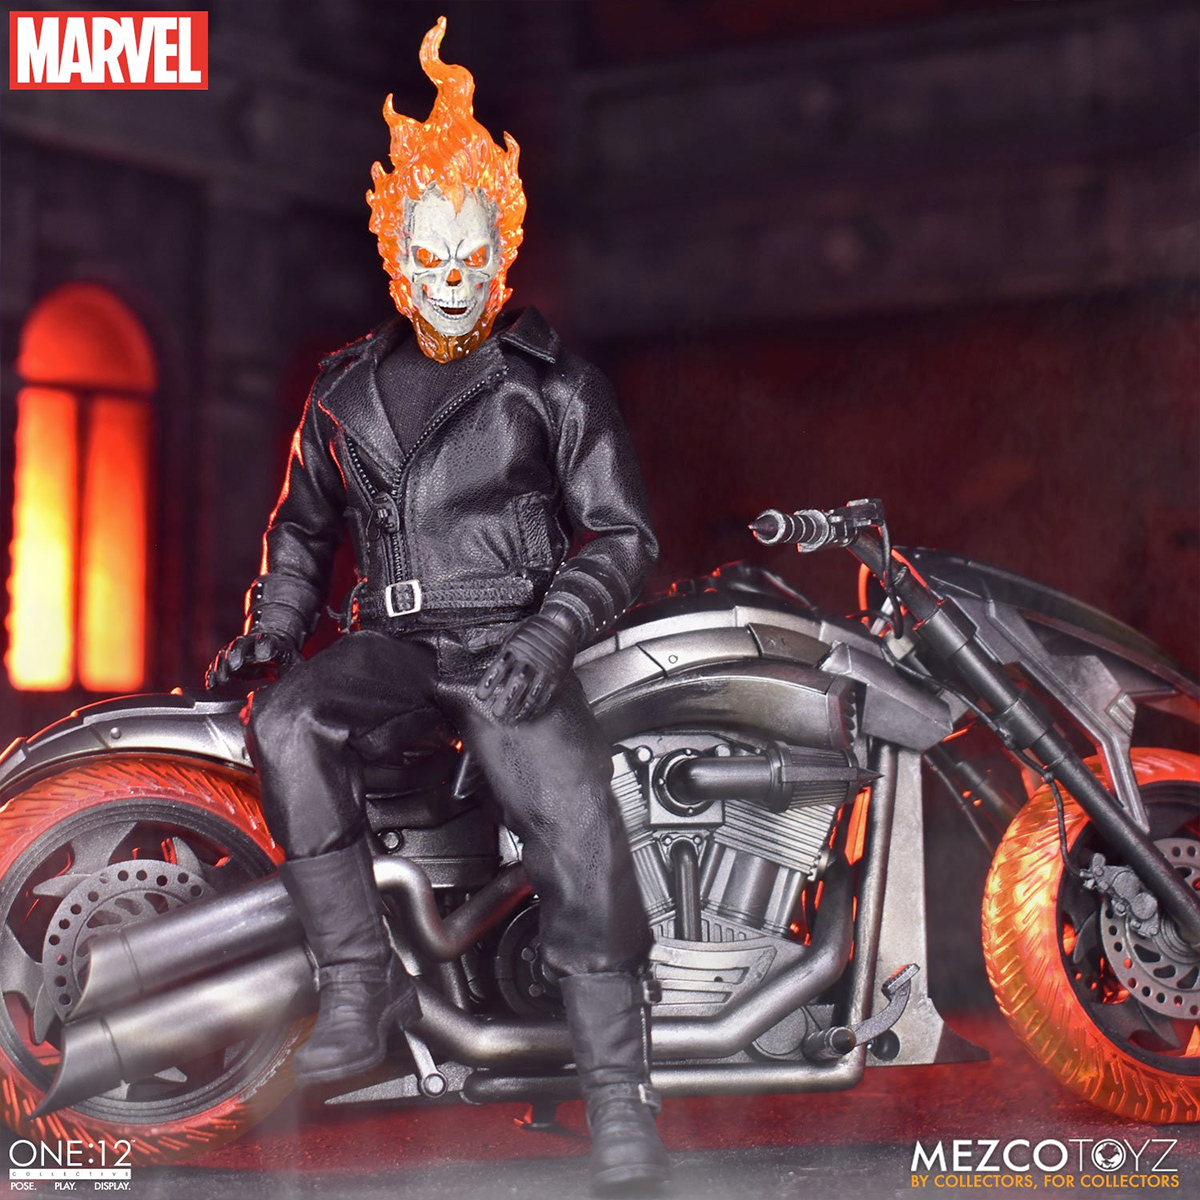 Action Figure Motoqueiro Fantasma One:12 Collective com a Moto Hell Cycle (Ghost  Rider) « Blog de Brinquedo